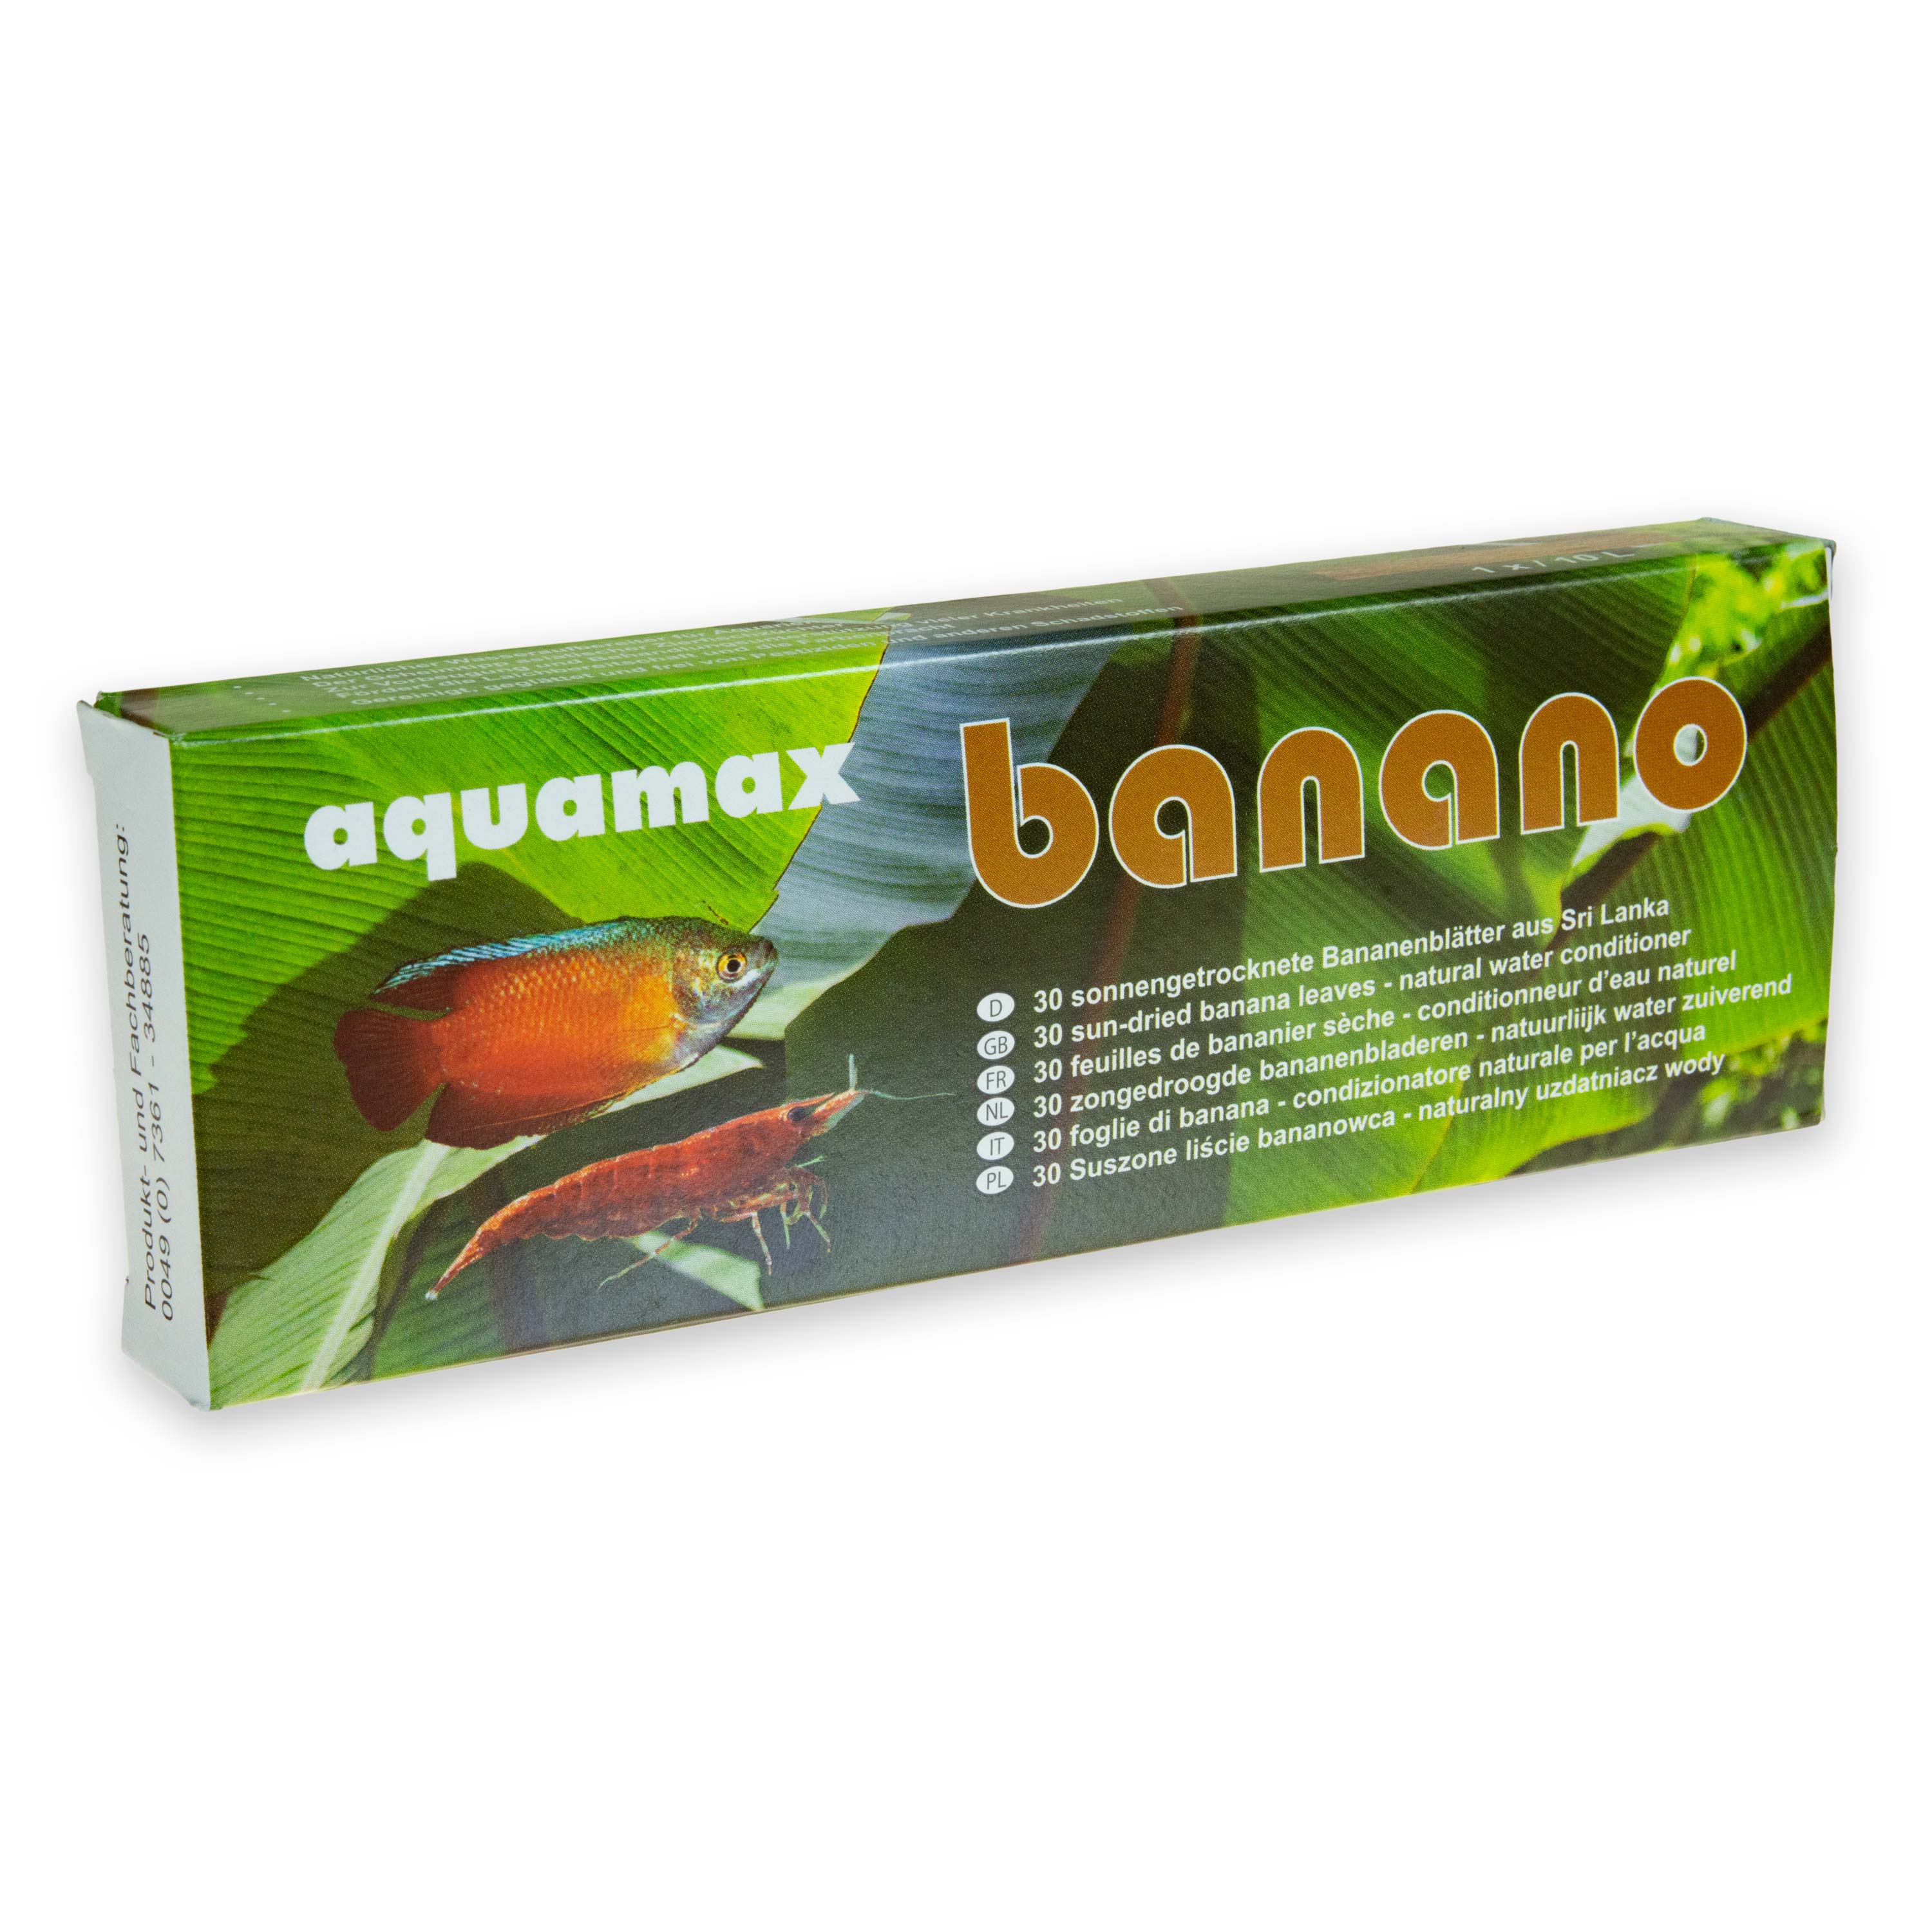 Banano aquamax